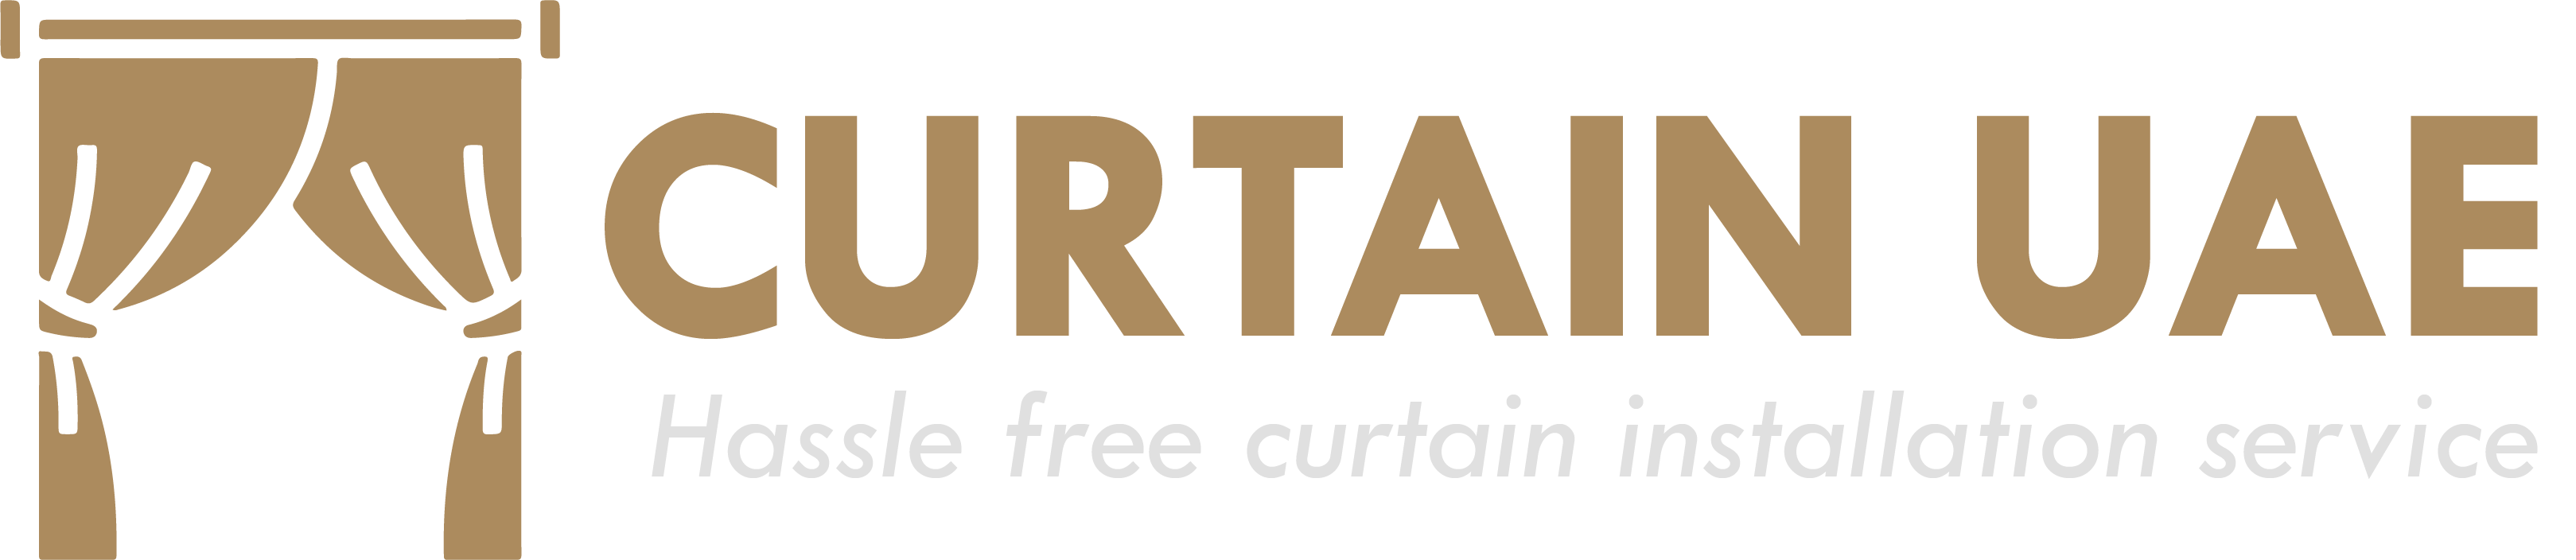 Curtain UAE - Dubai's Premier Curtain Solutions